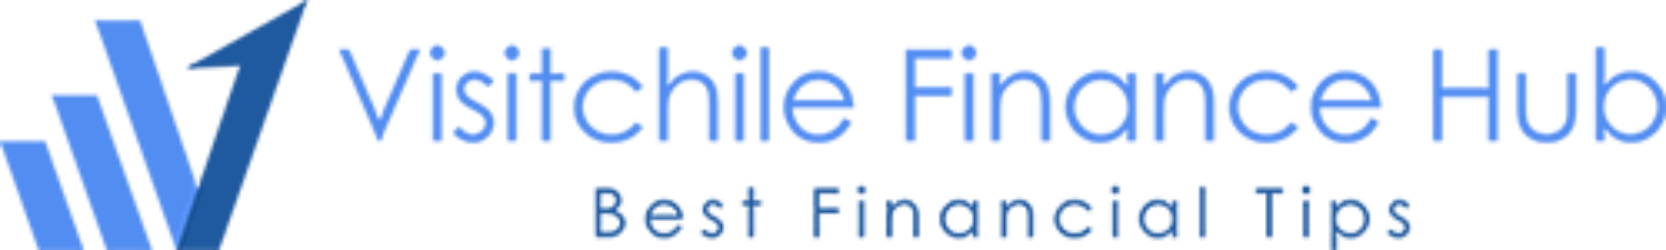 Visitchile Finance Hub